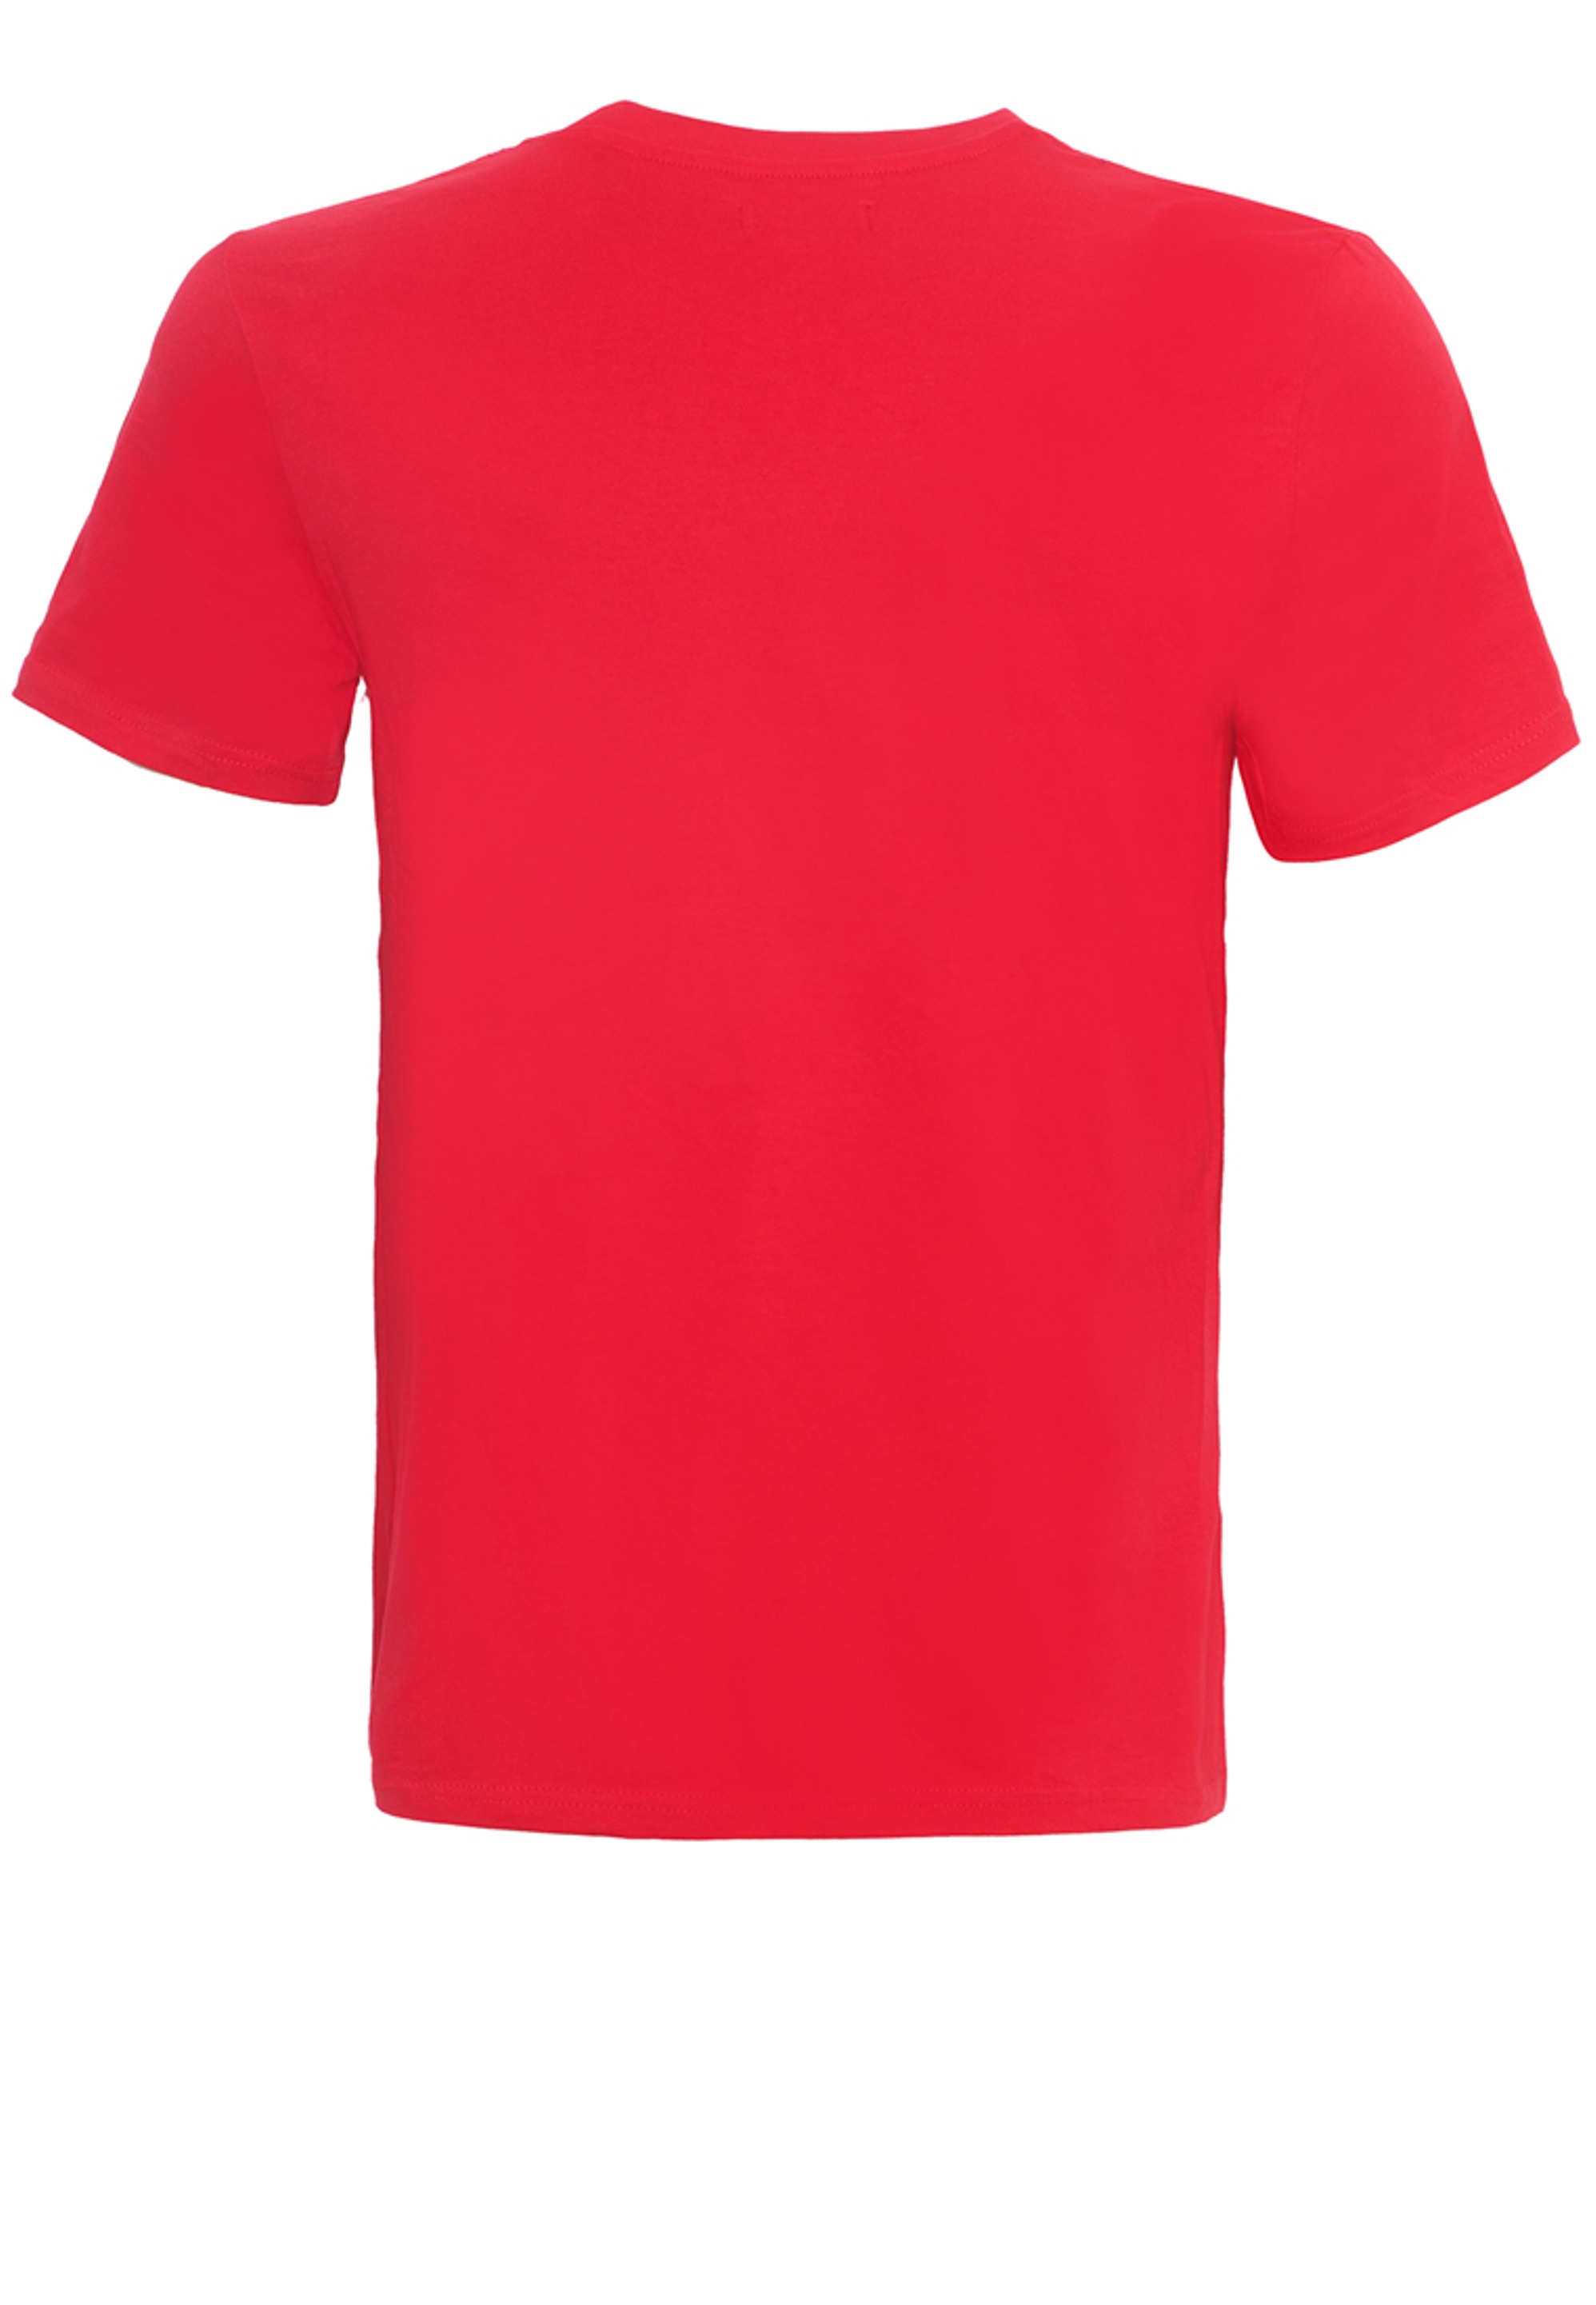 FCKTV - Unisex Shirt